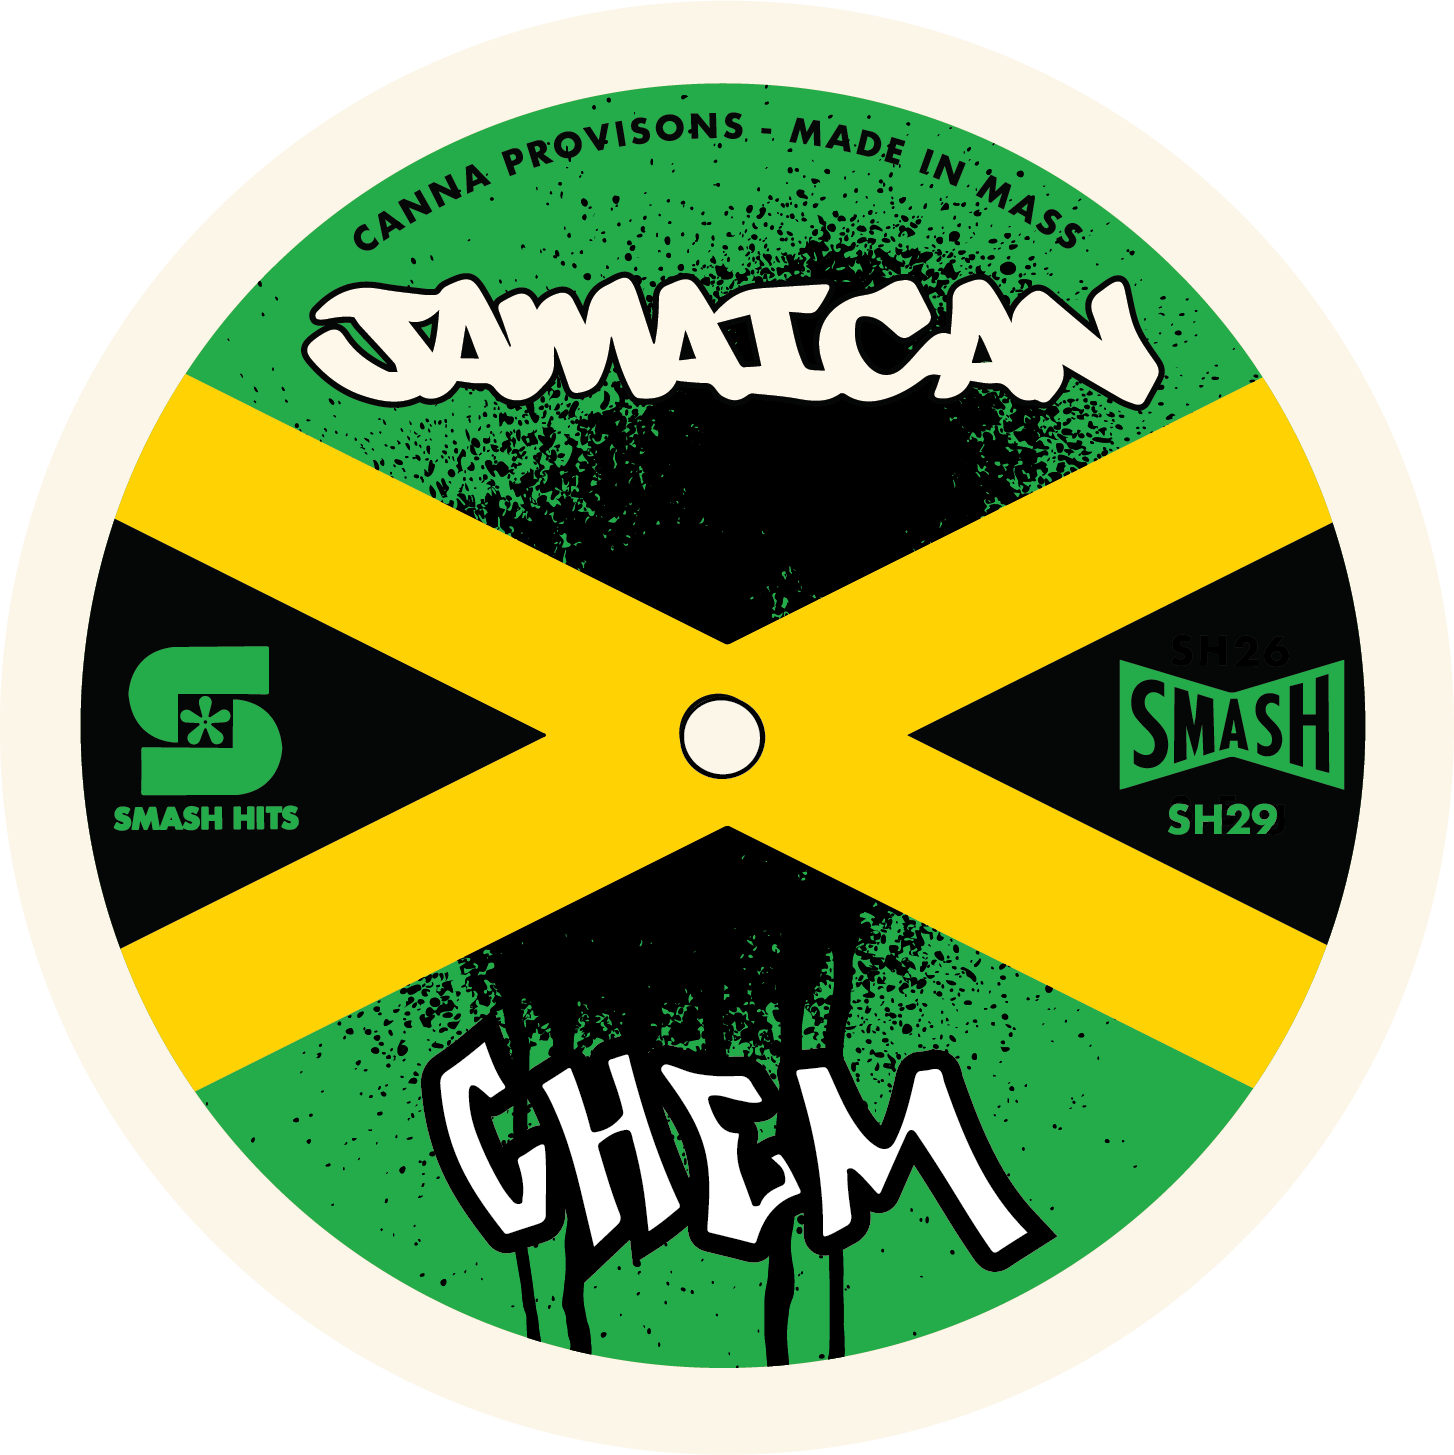 jamaican chem chemdog smash hits canna provisions